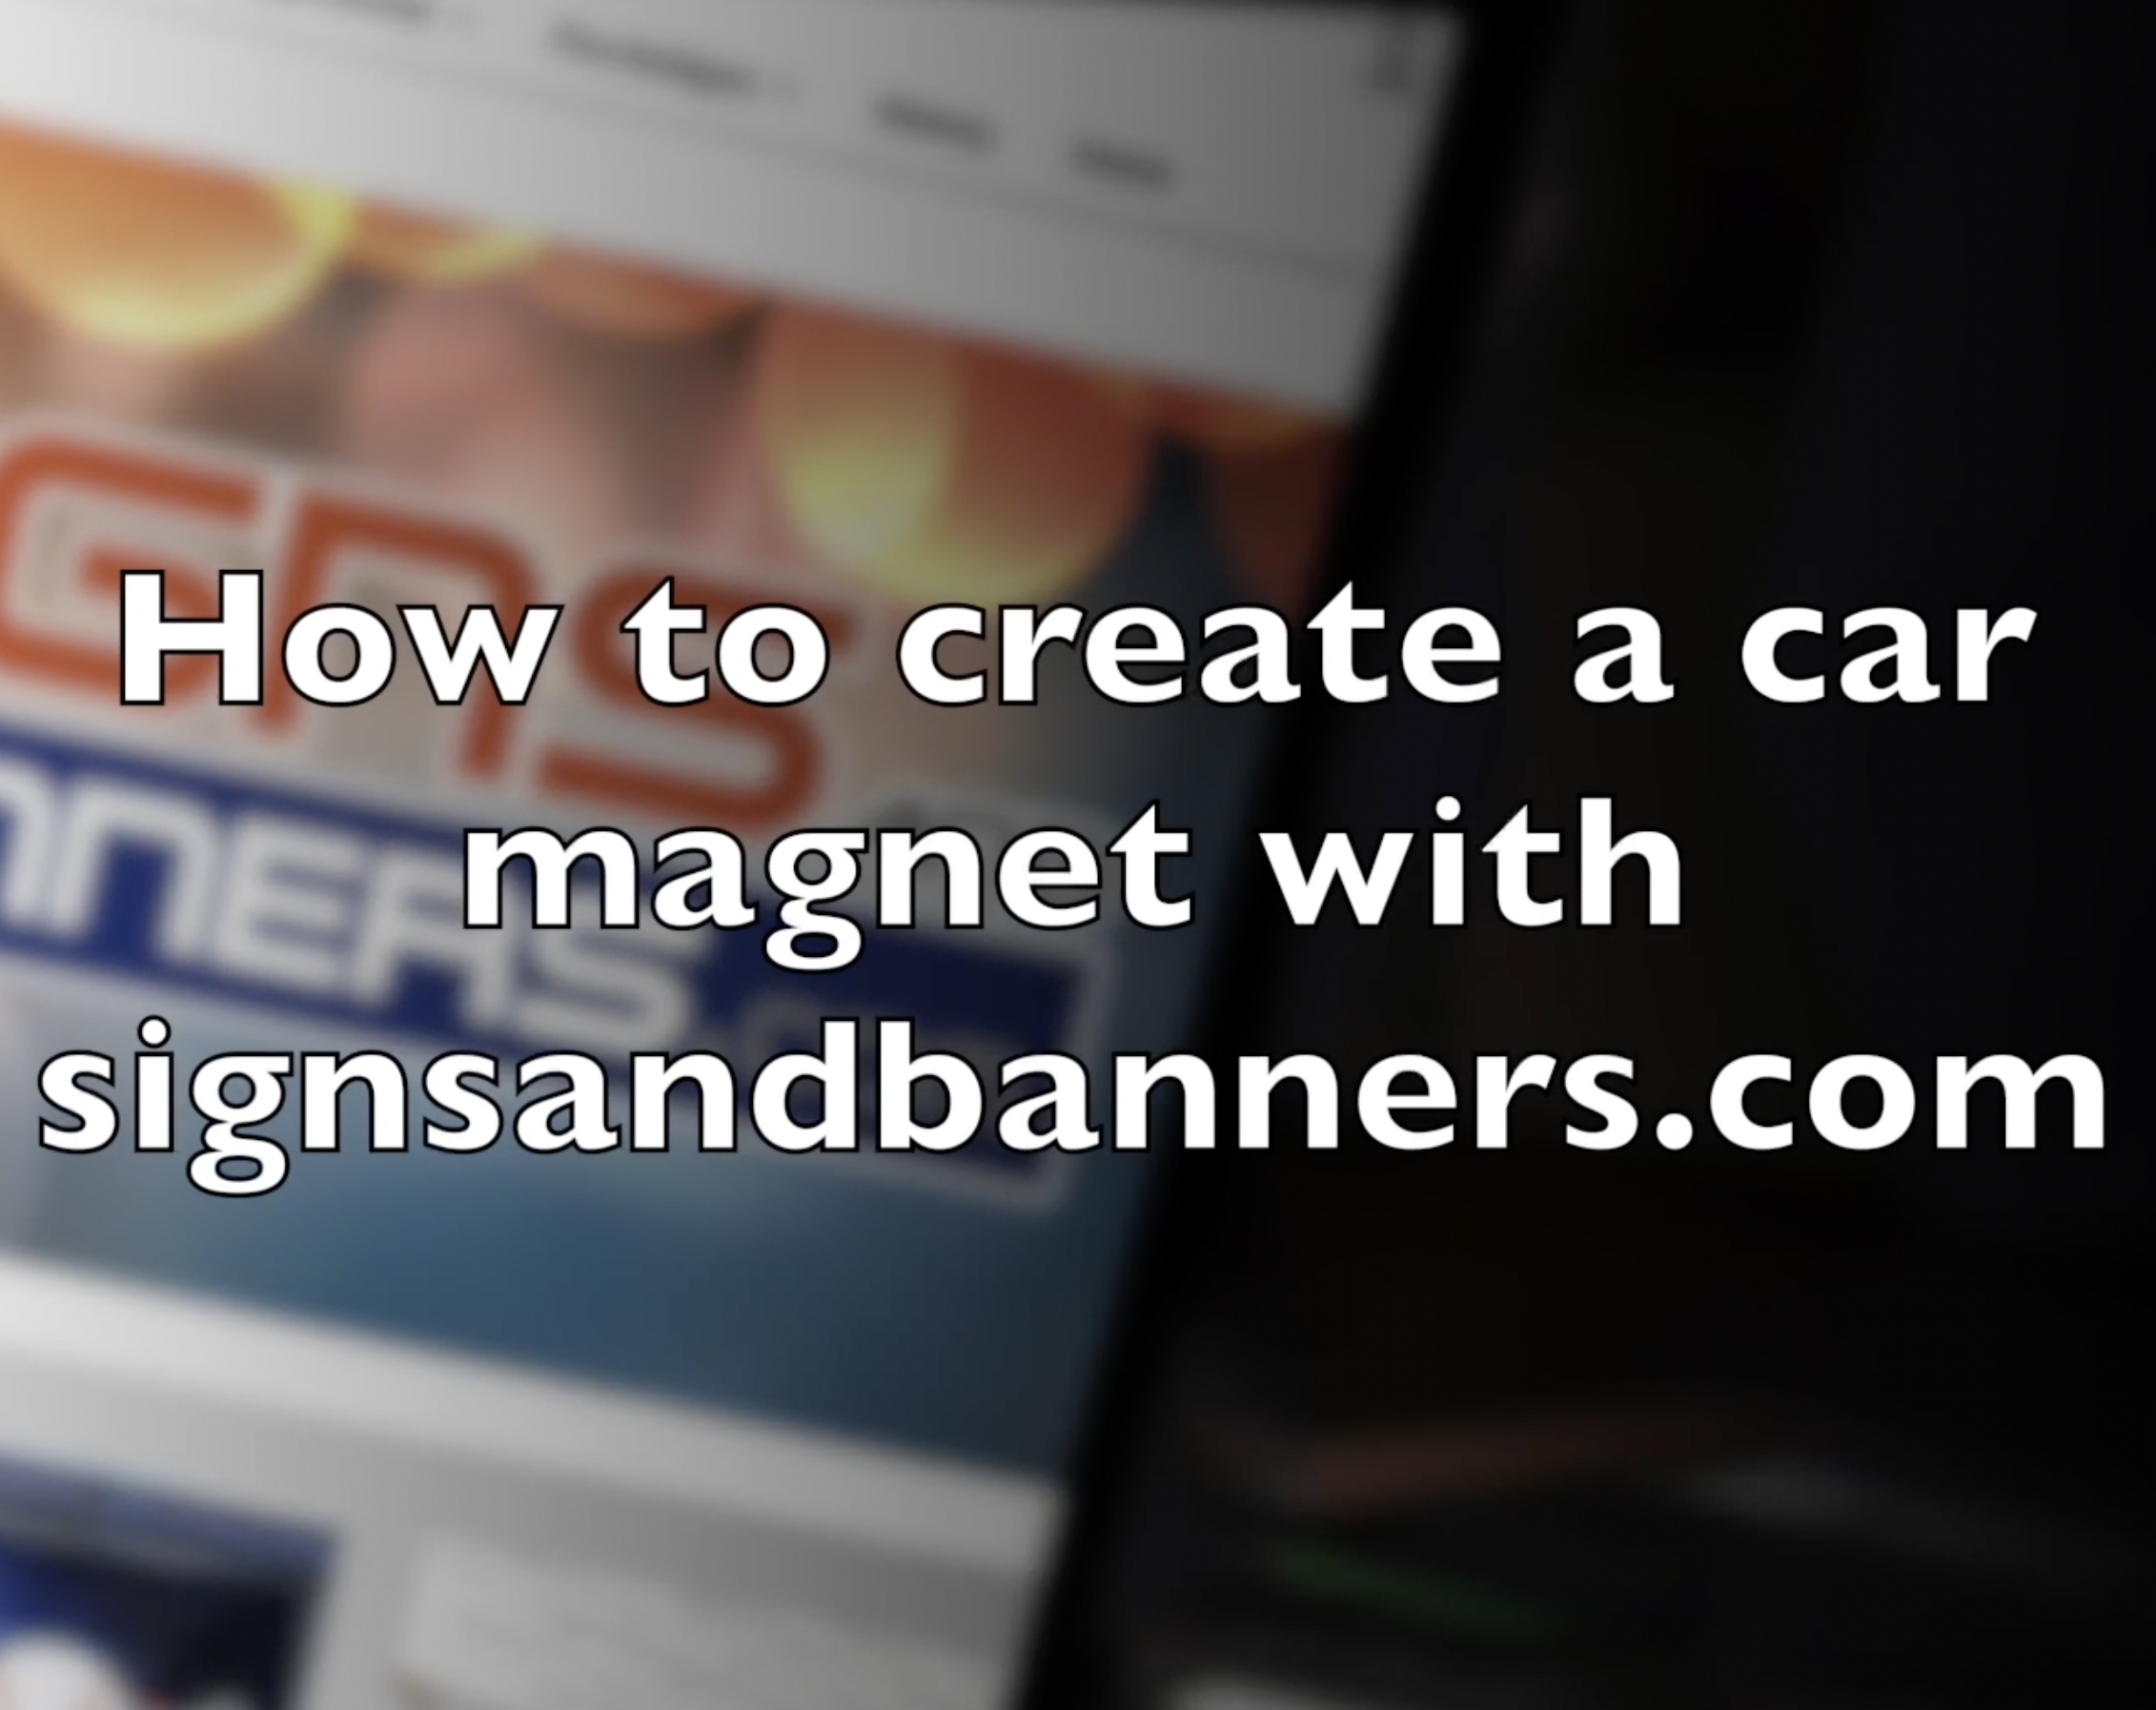 How to create a car magnet on signsandbanners.com